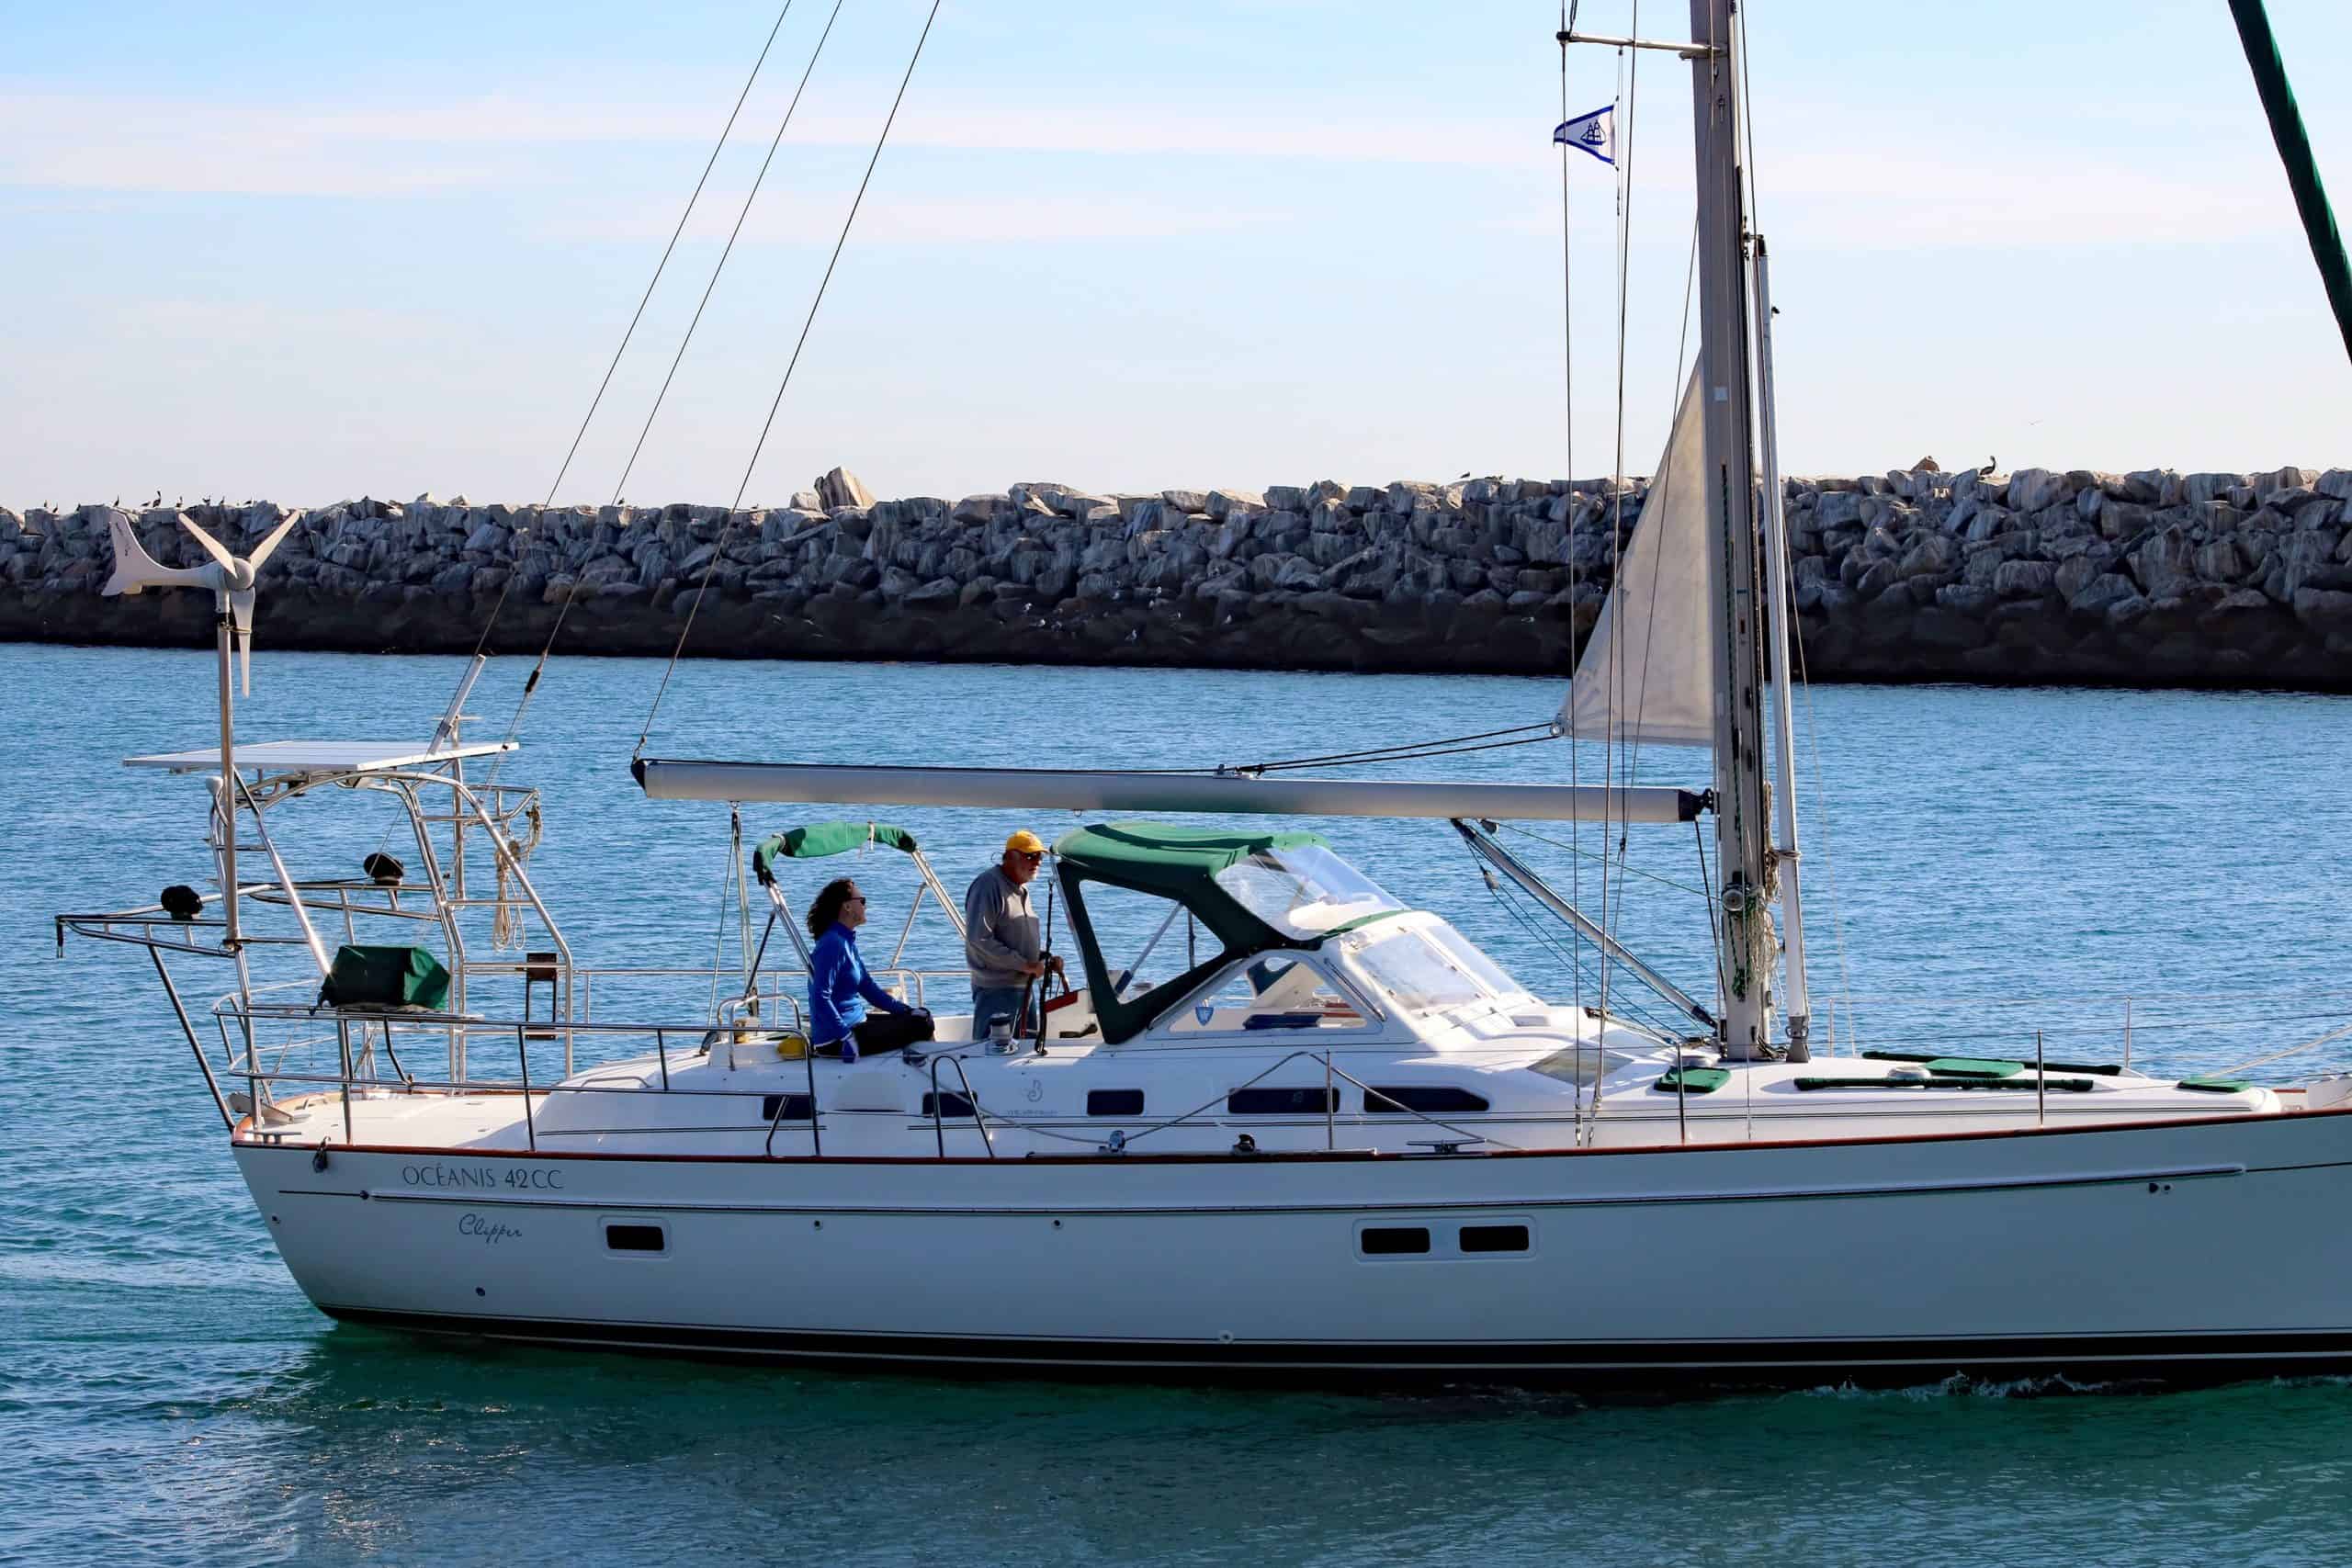 42 ft beneteau sailboat